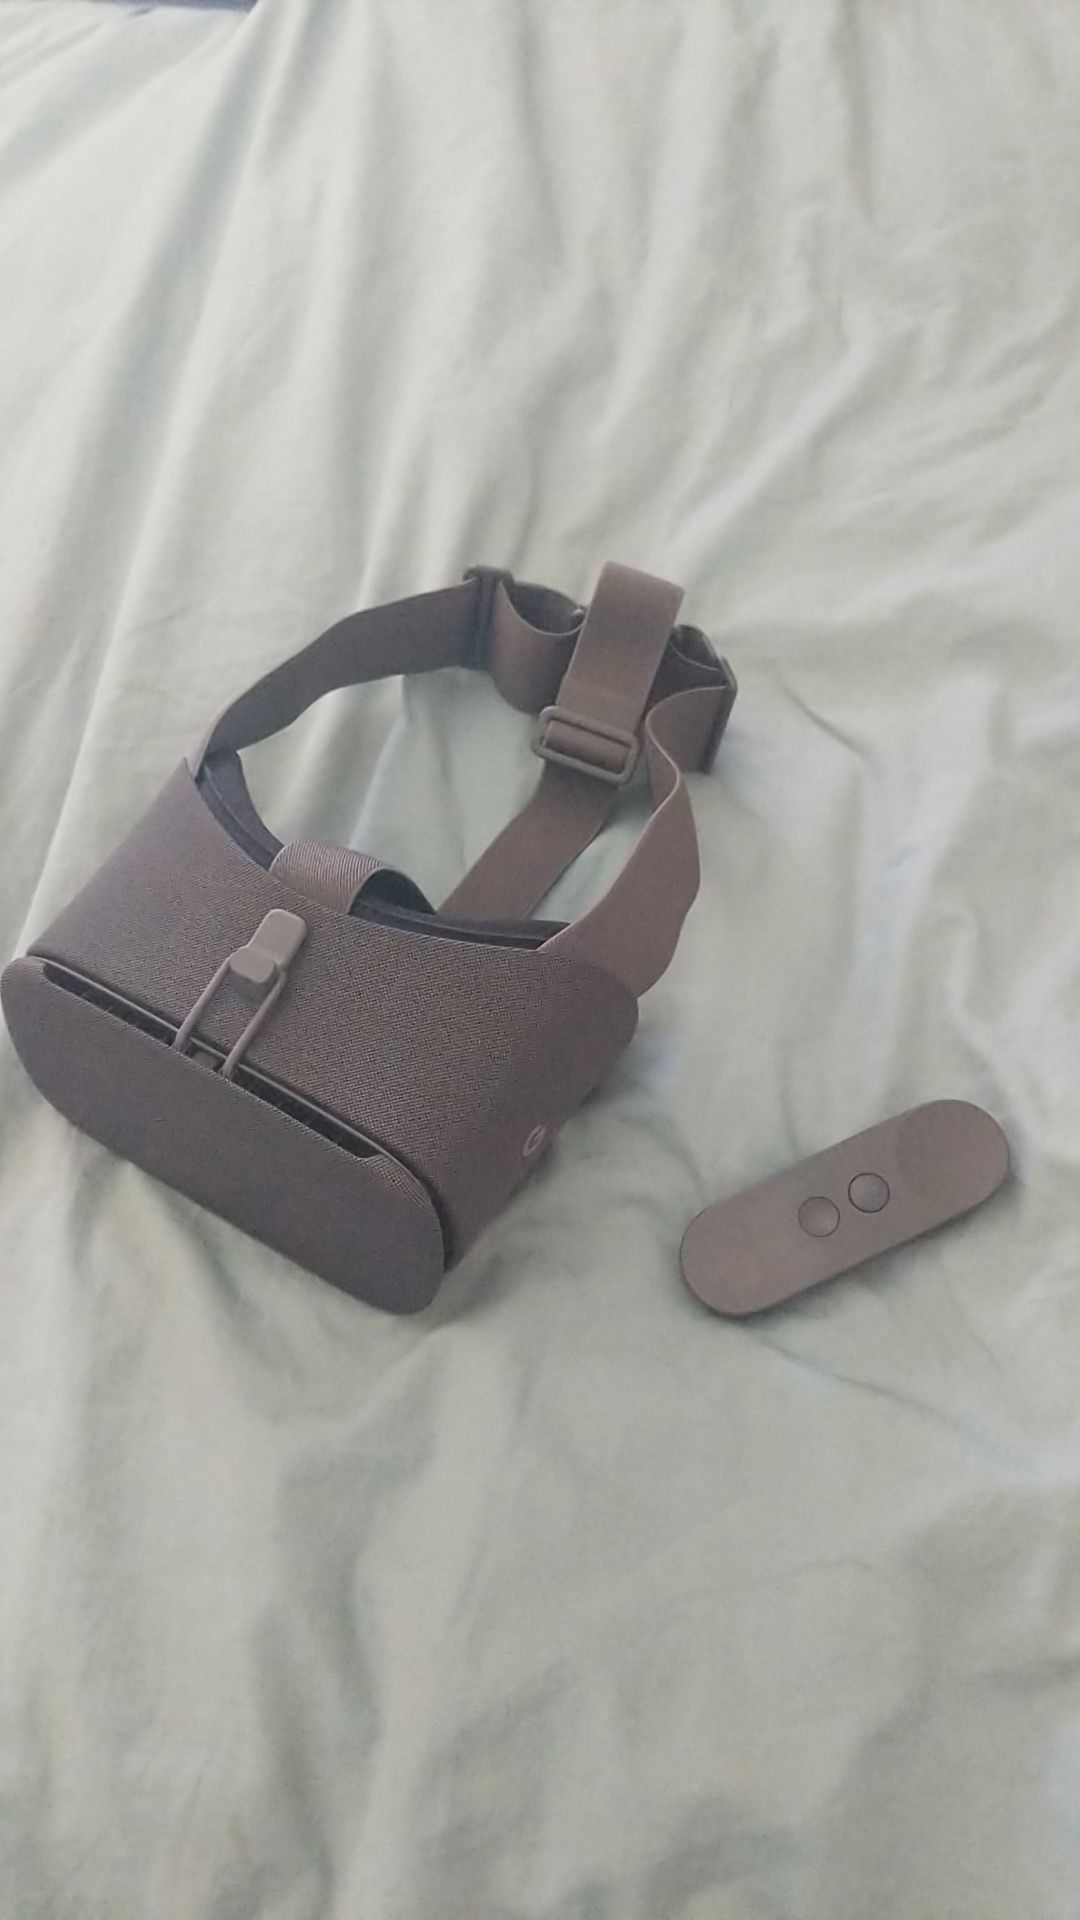 Google Daydream Virtual Reality (VR) Headset